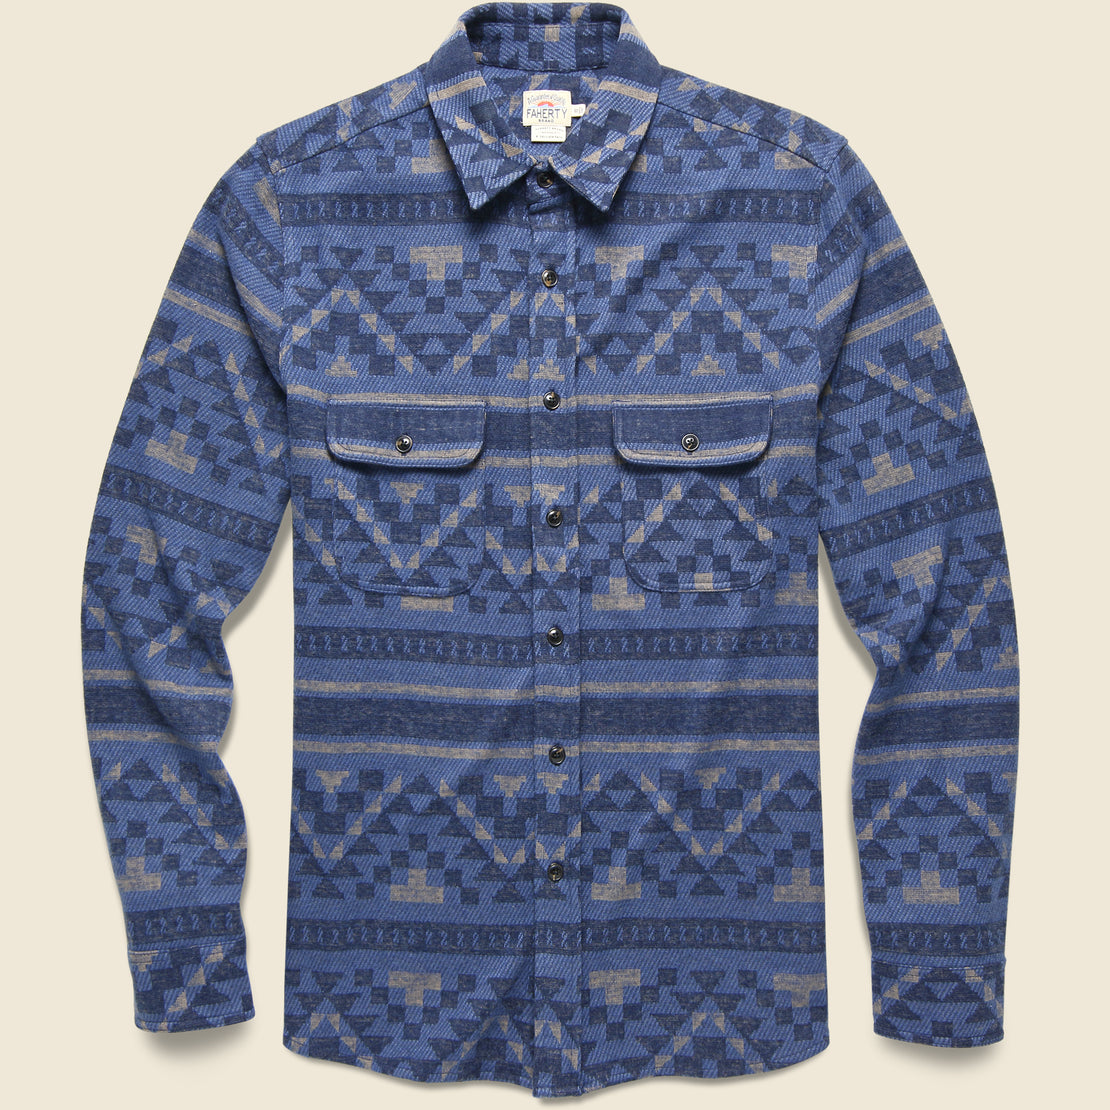 Faherty B. Yellowtail Legend Sweater Shirt - Bighorn Night